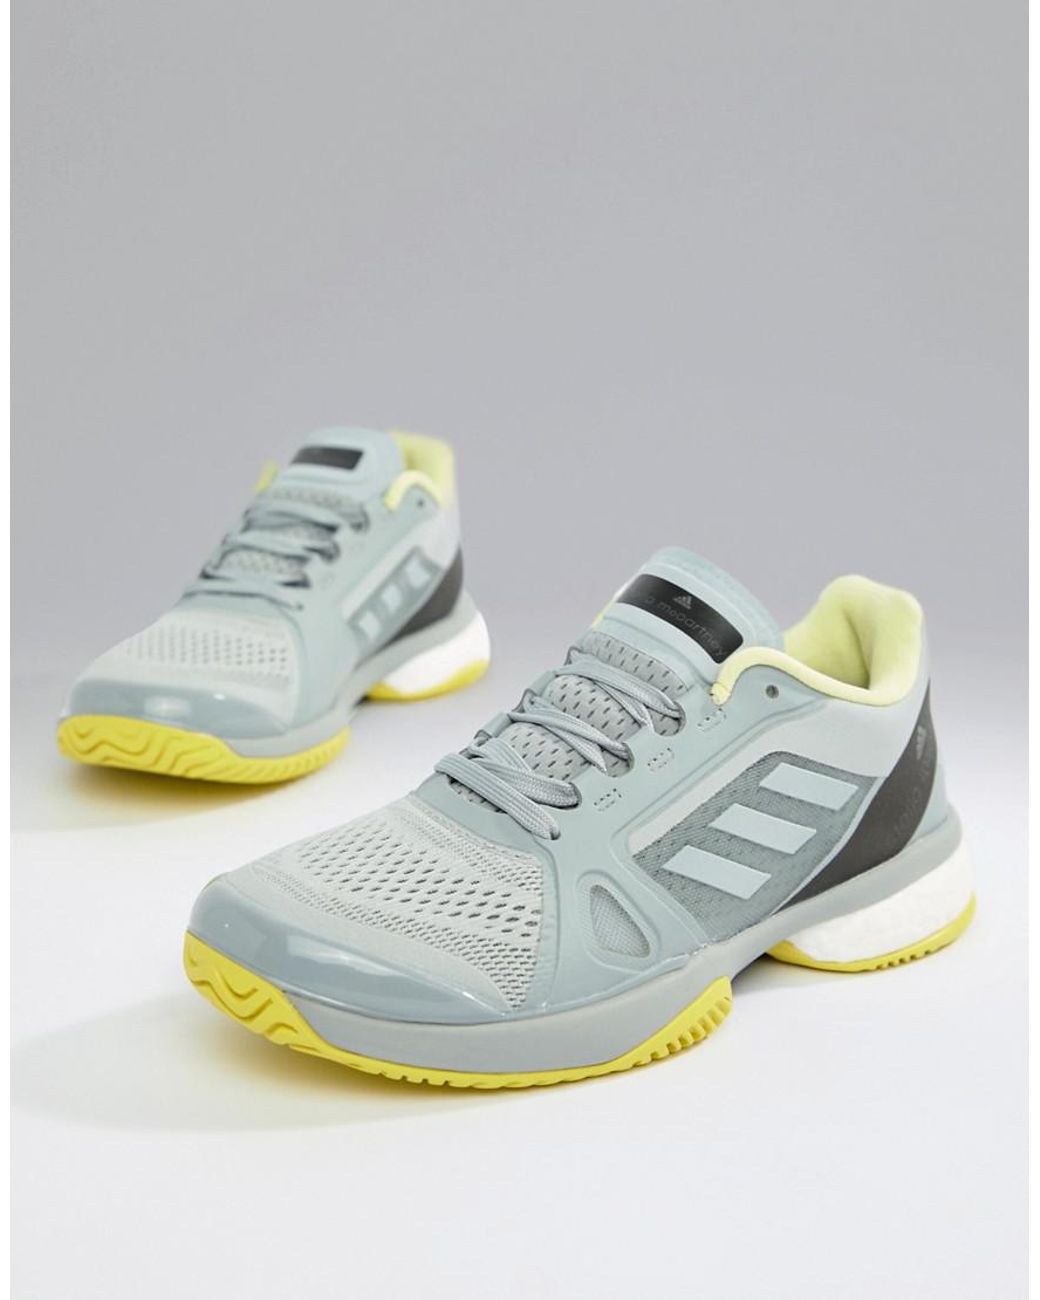 Adidas Stella Mccartney Barricade Boost Tennis Shoes | vlr.eng.br